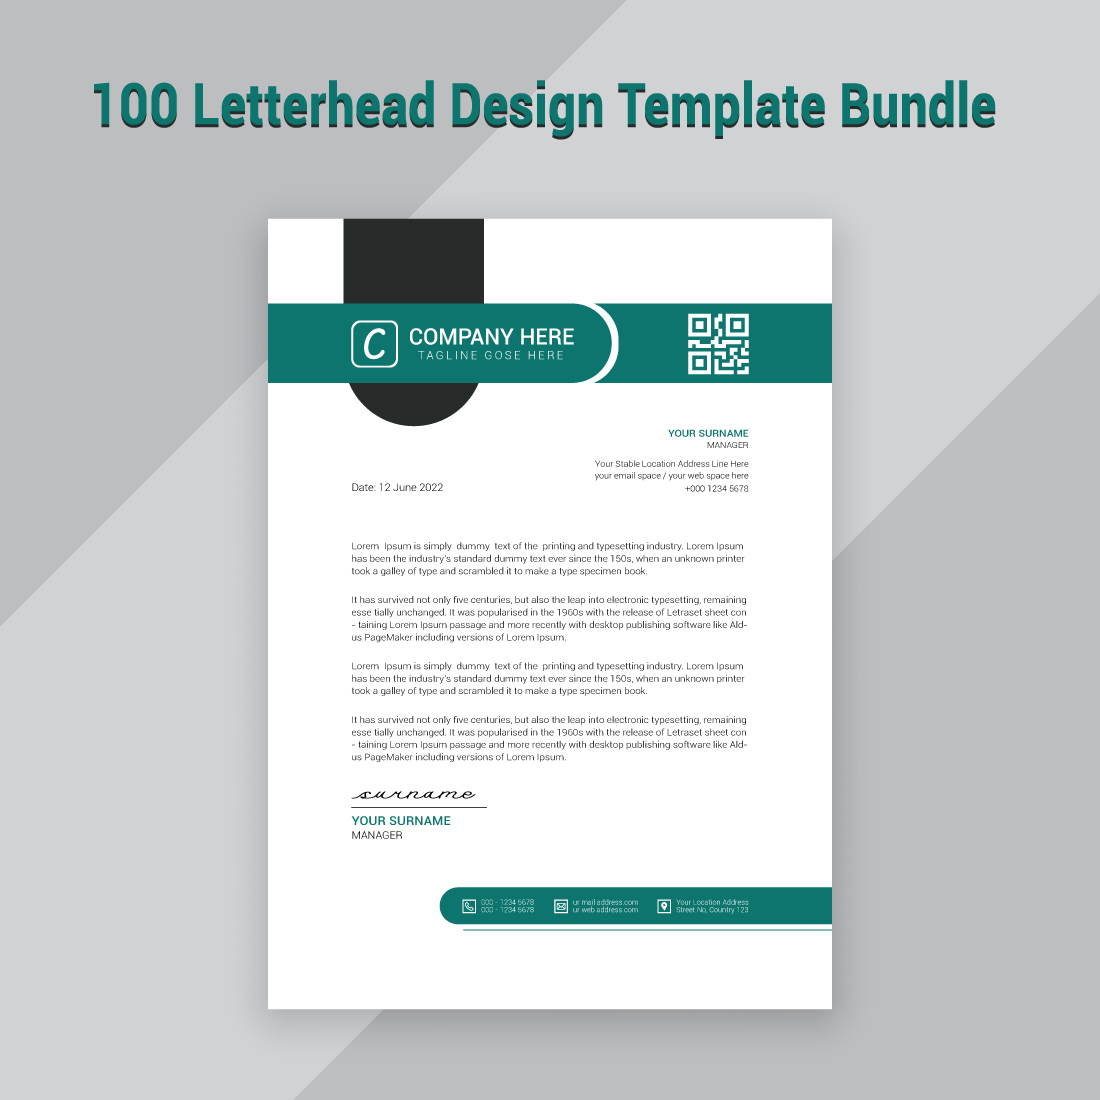 100 Letterhead Design Template Bundle cover image.